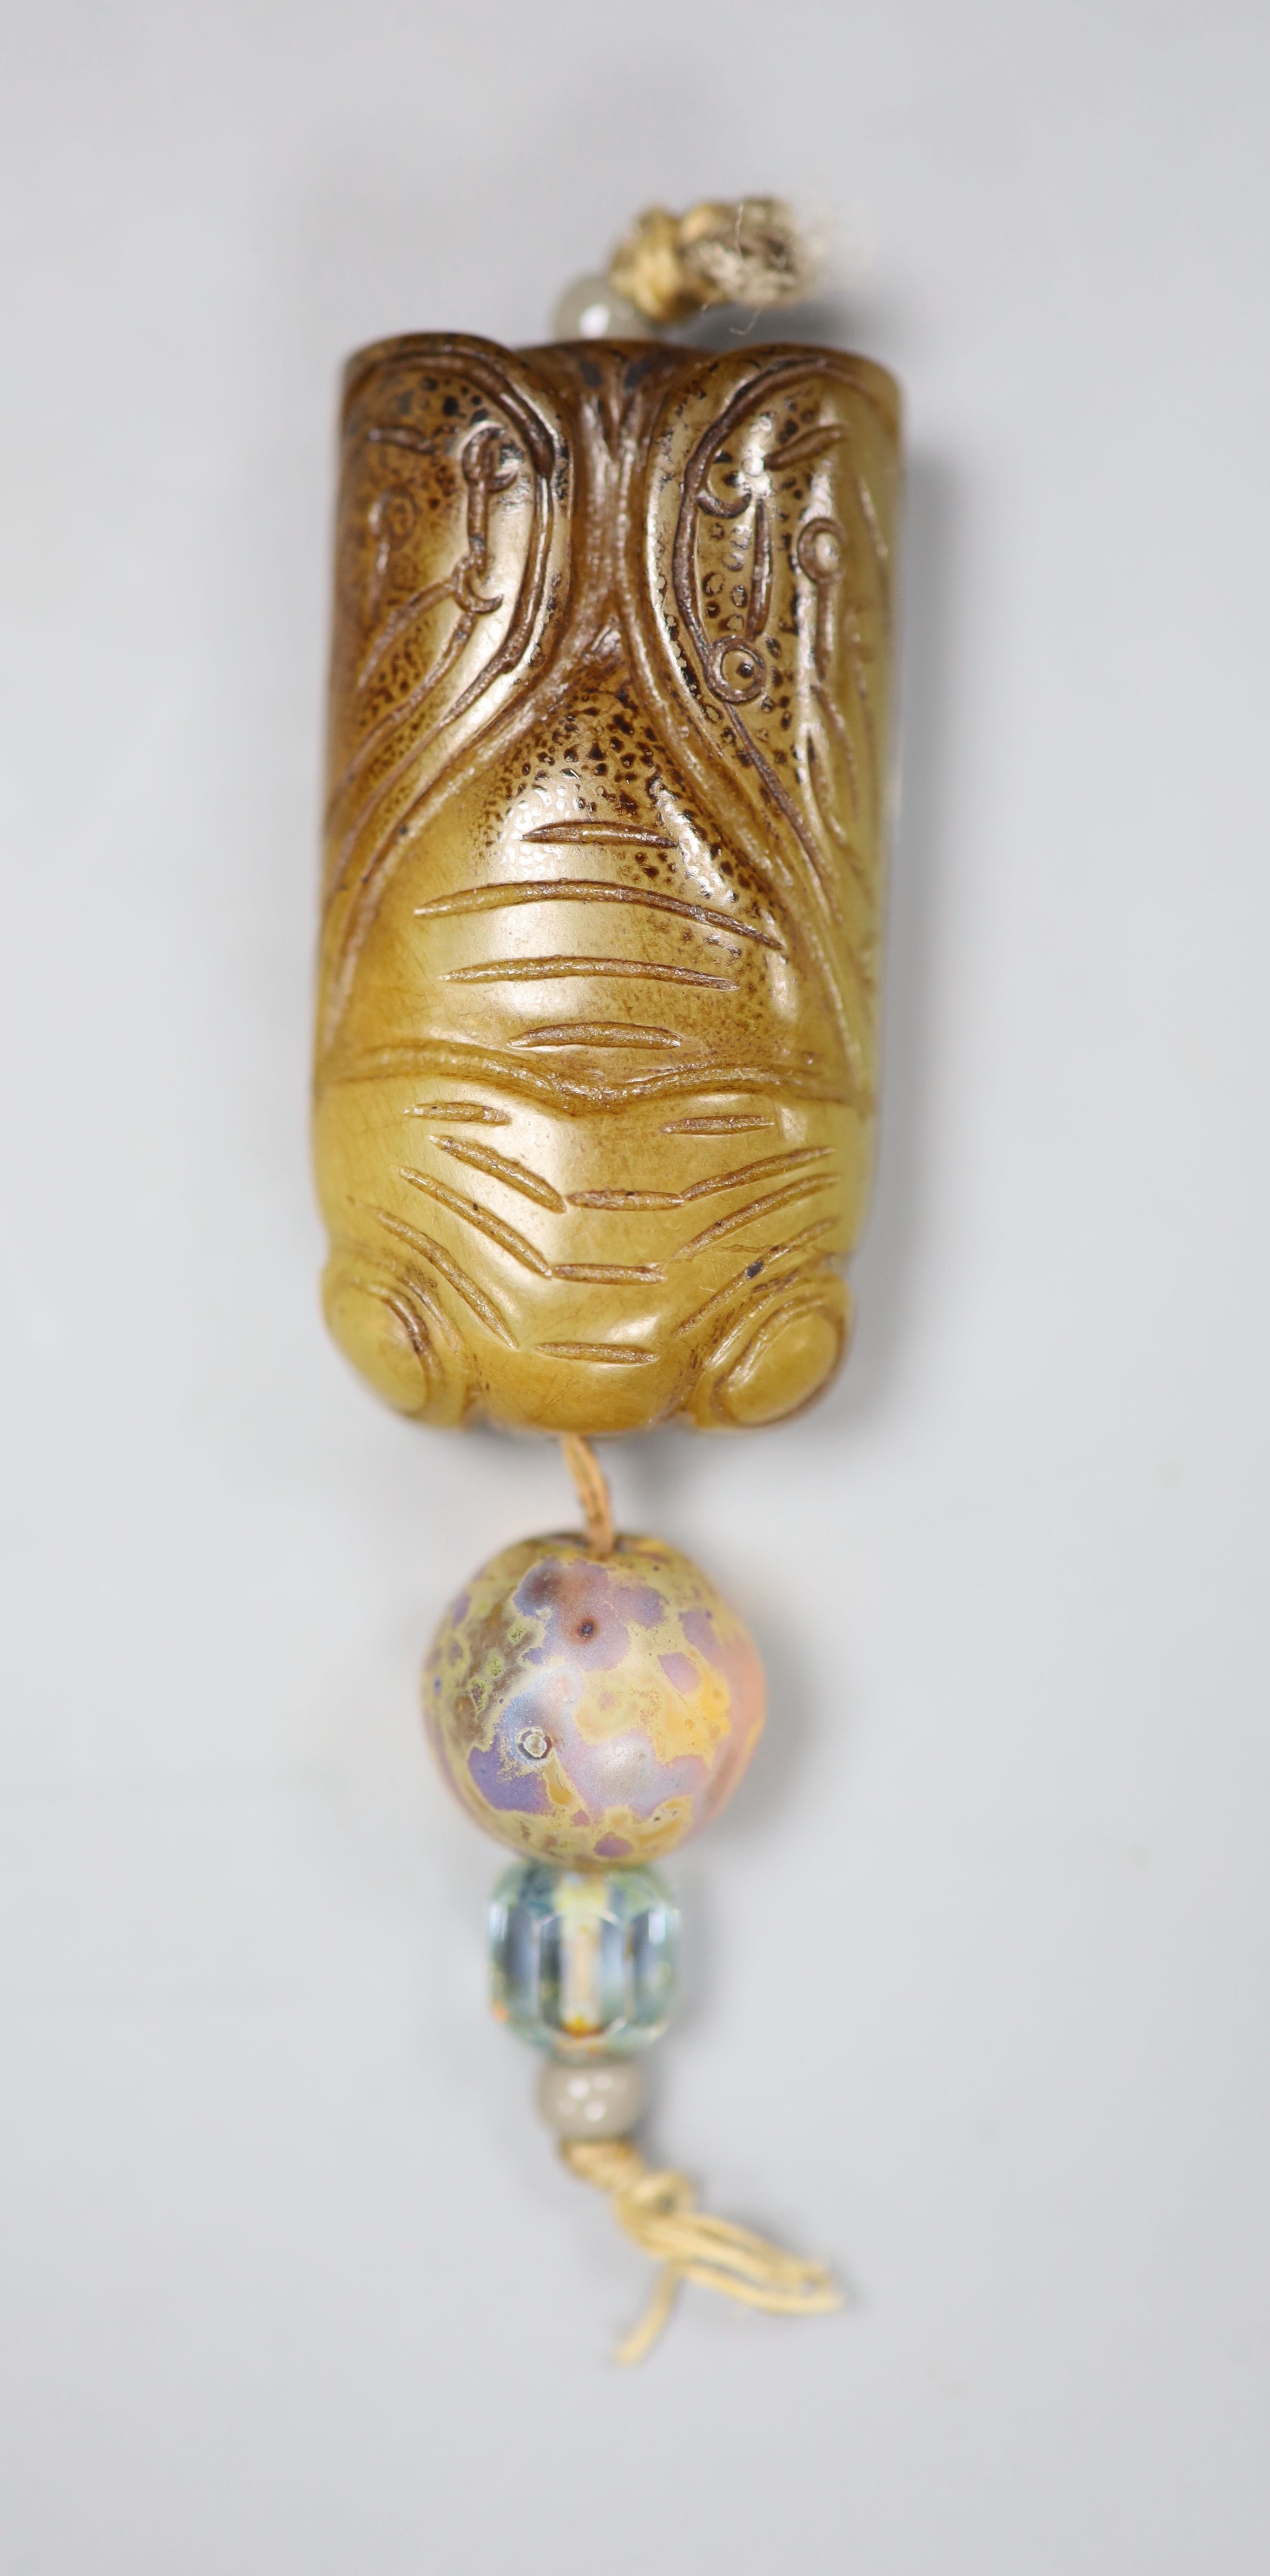 A Chinese jade cicada pendant, length 4cm